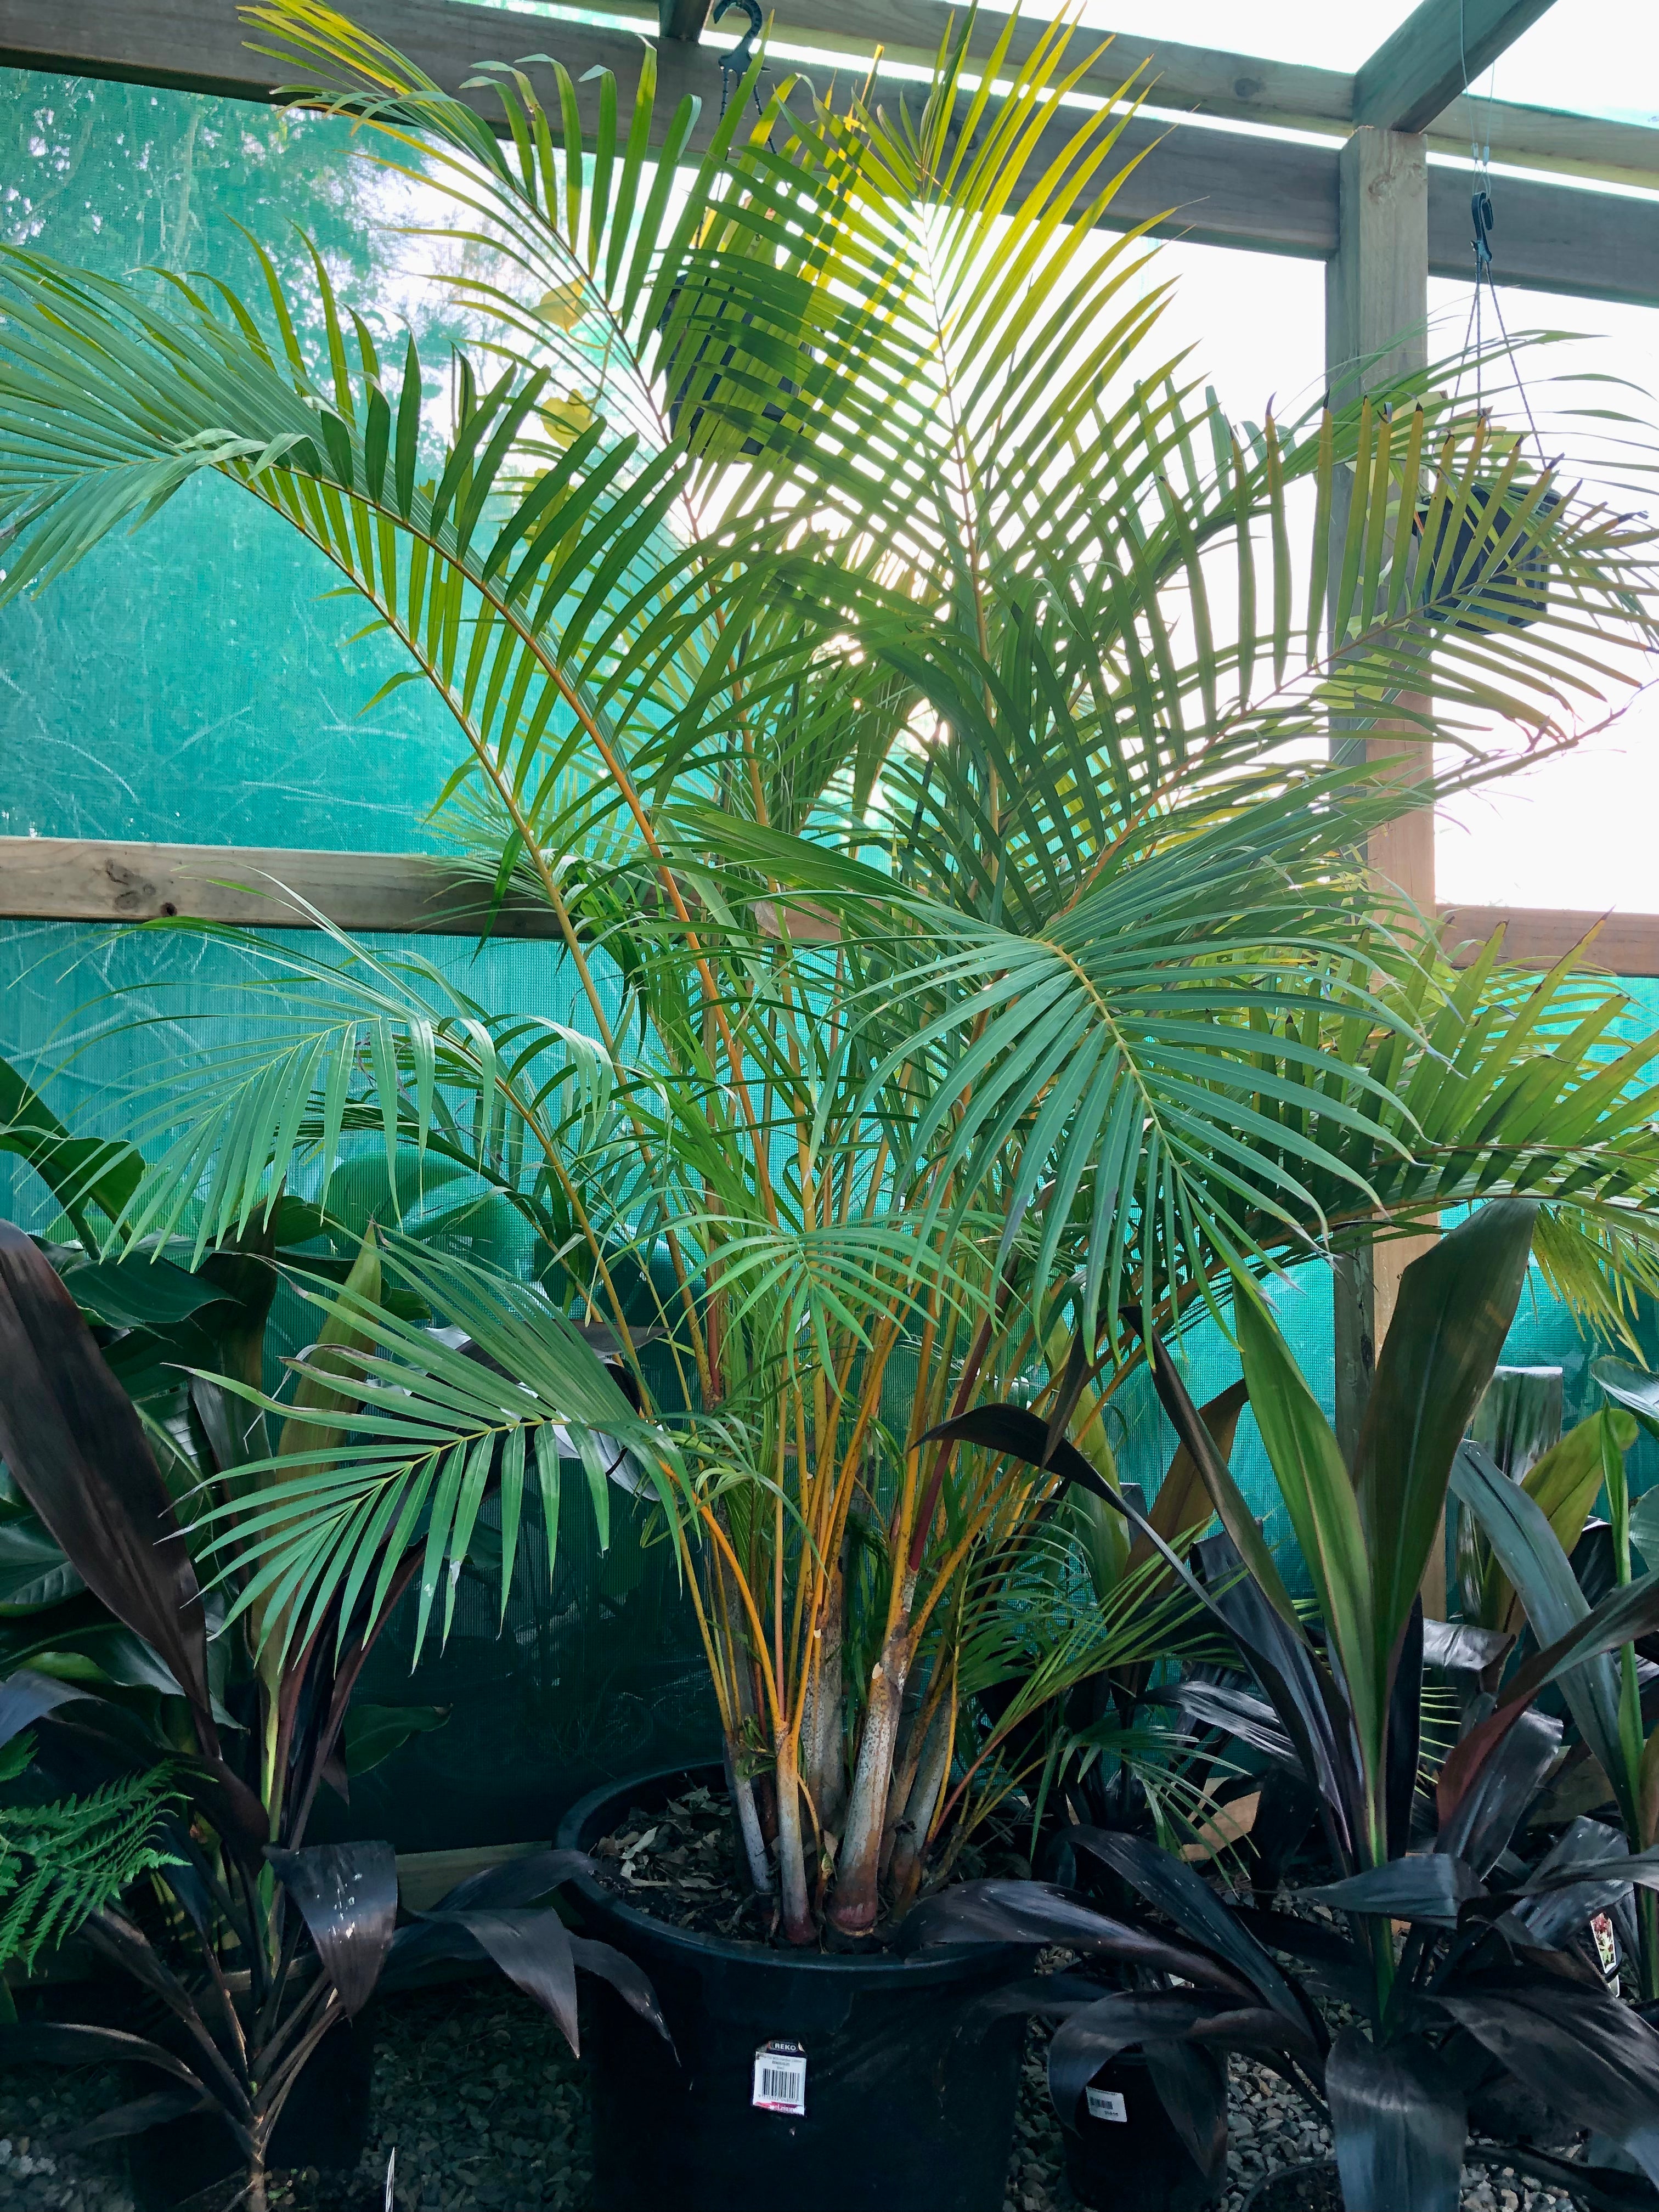 Dypsis lutescens - Golden Cane Palm